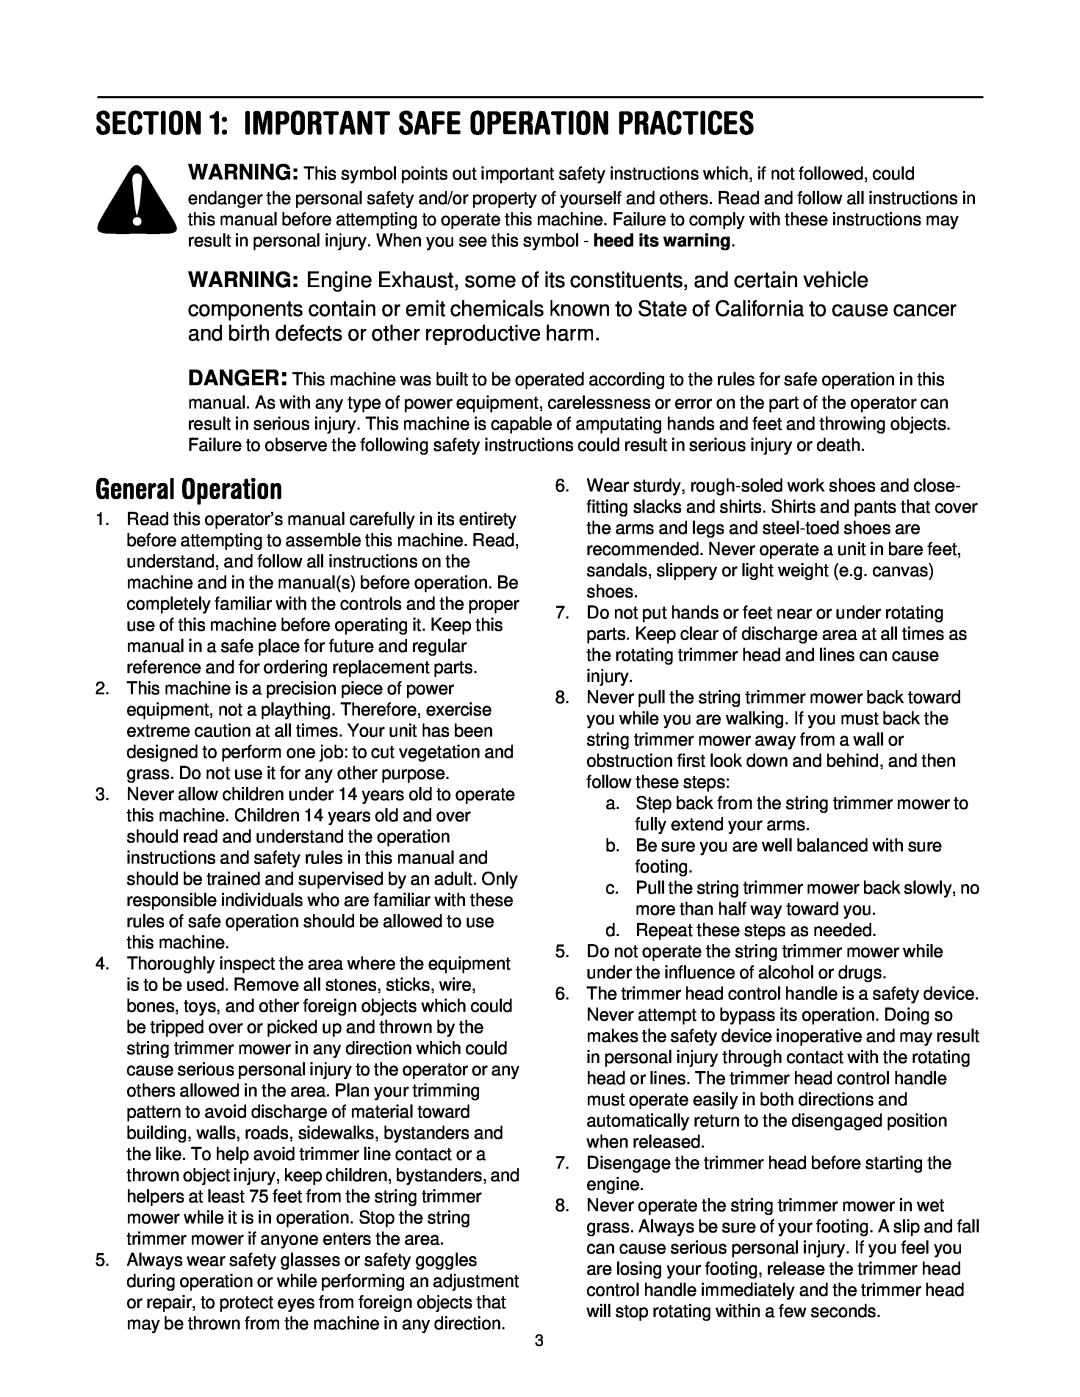 Troy-Bilt 258 manual Important Safe Operation Practices, General Operation 